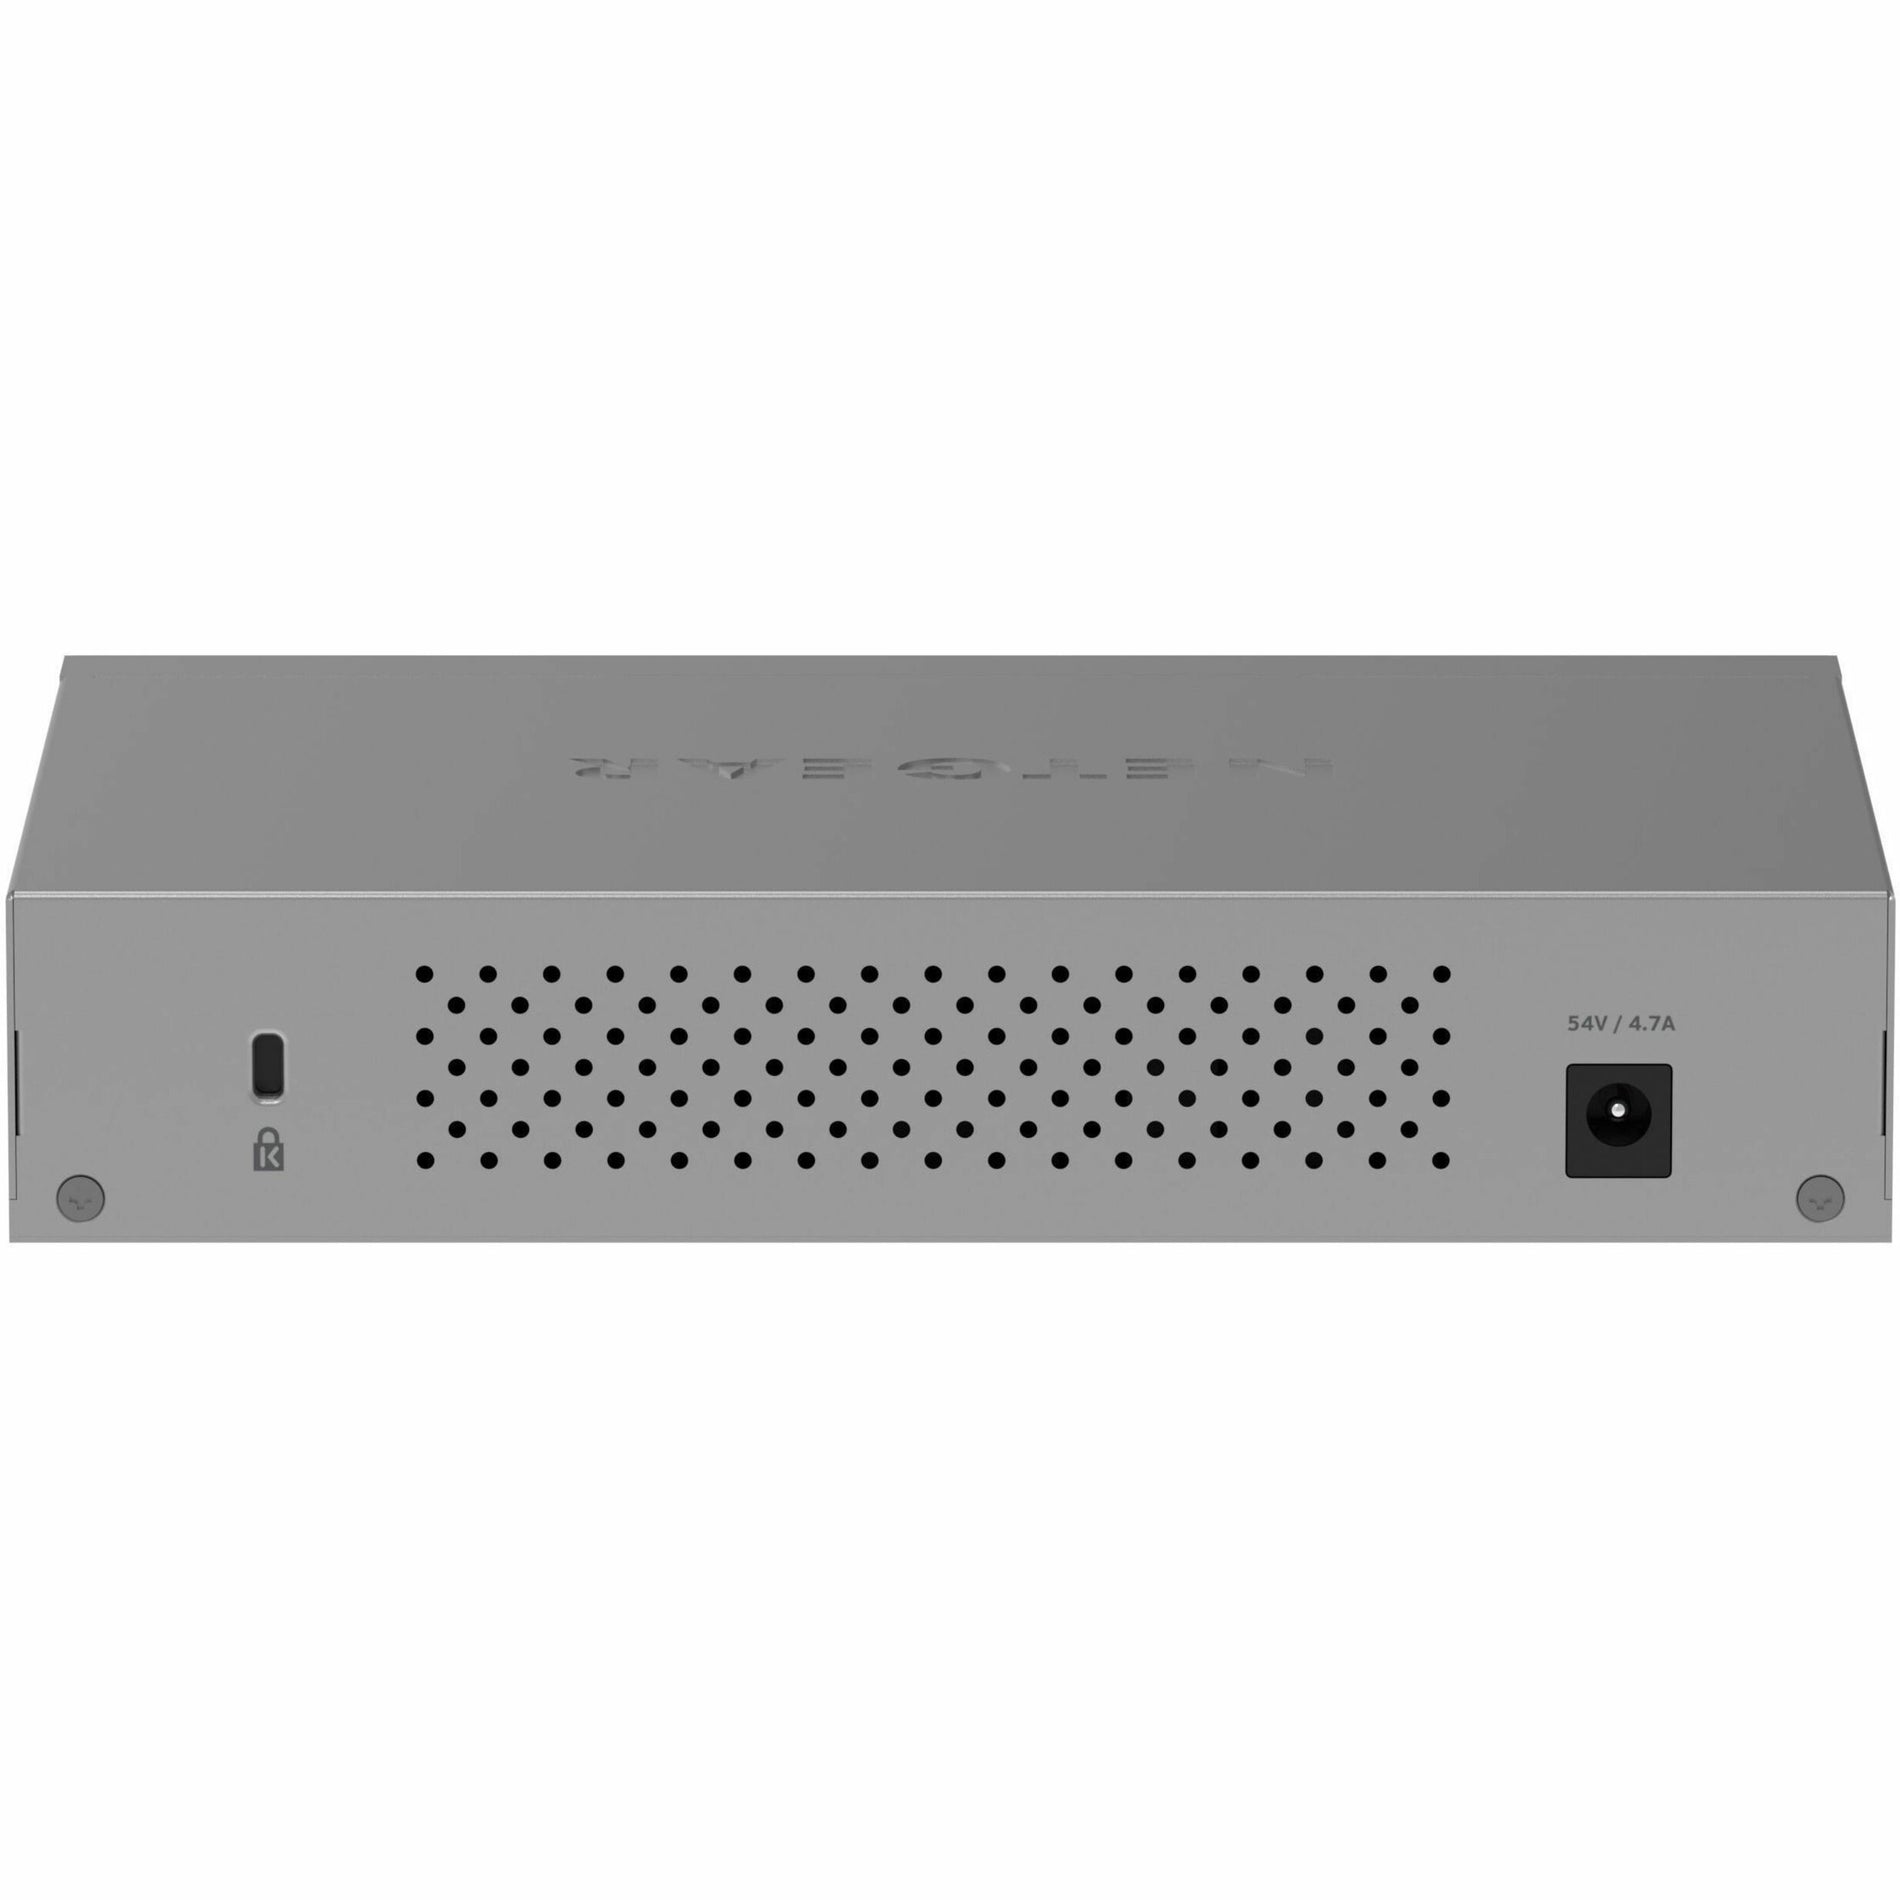 Netgear MS108TUP-100NAS Smart Ethernet Switch, 8 Network Ports, 2.5 Gigabit Ethernet, Fanless, Manageable